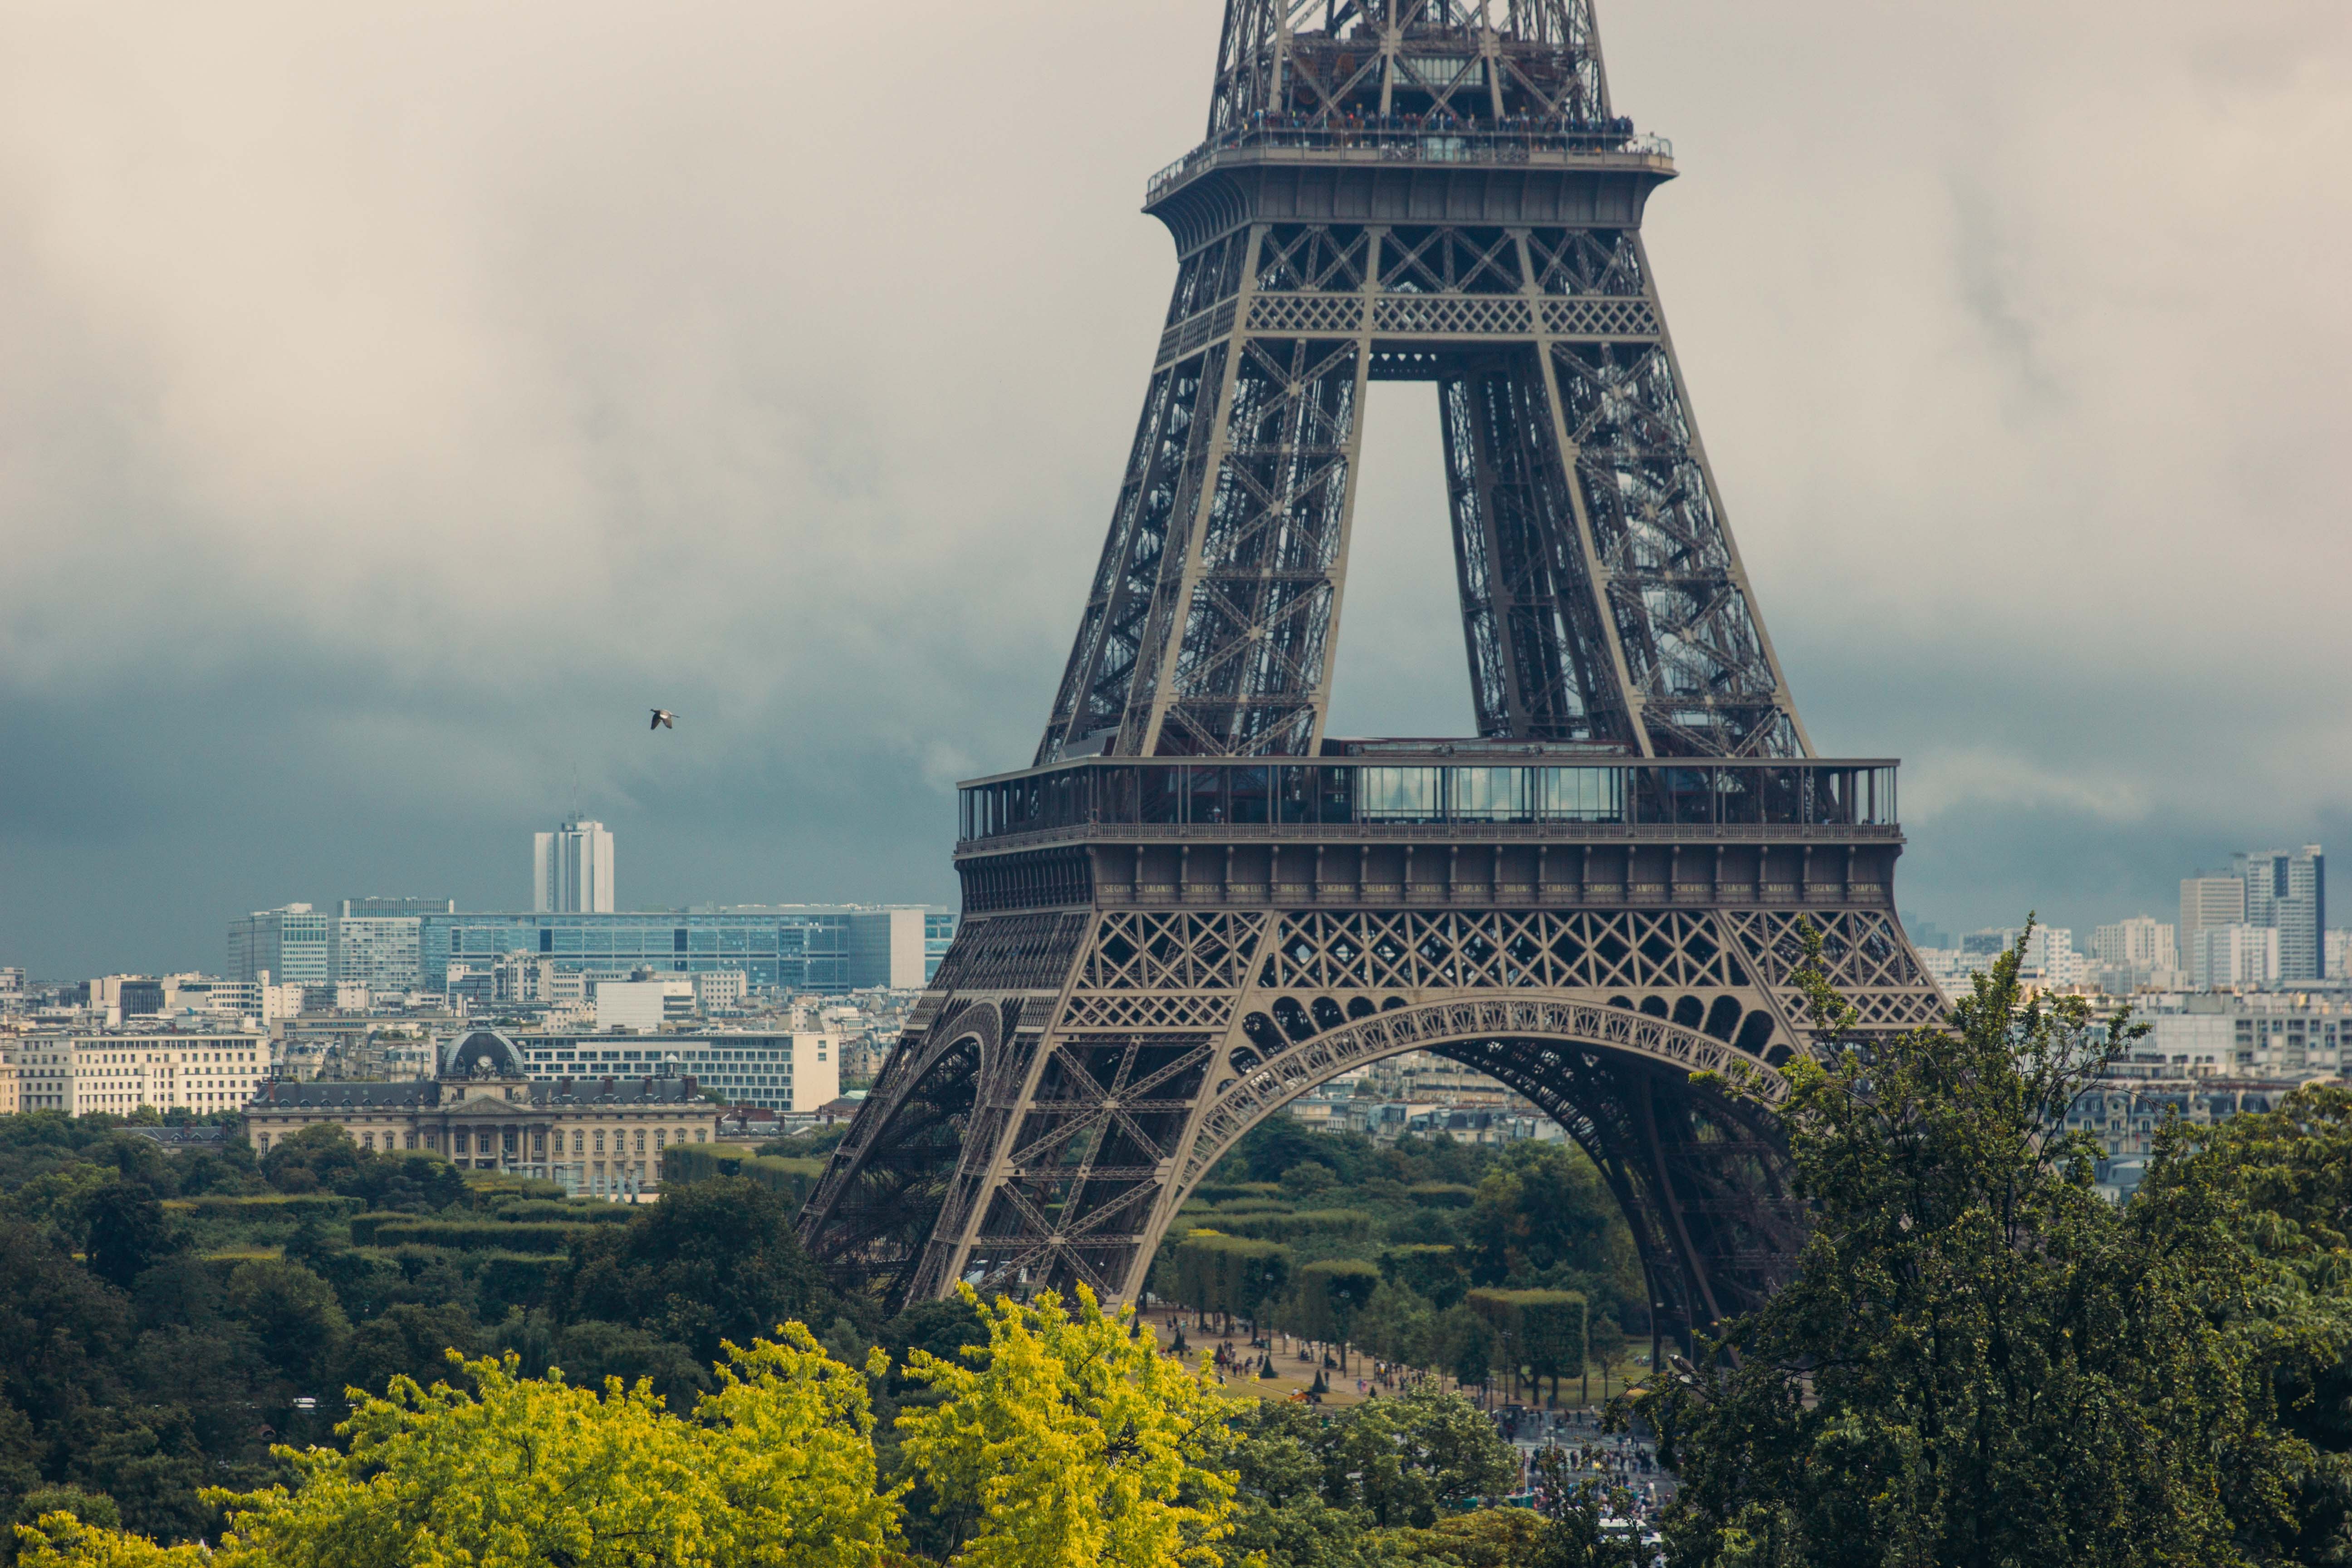 Foto Menara Eiffel Paris